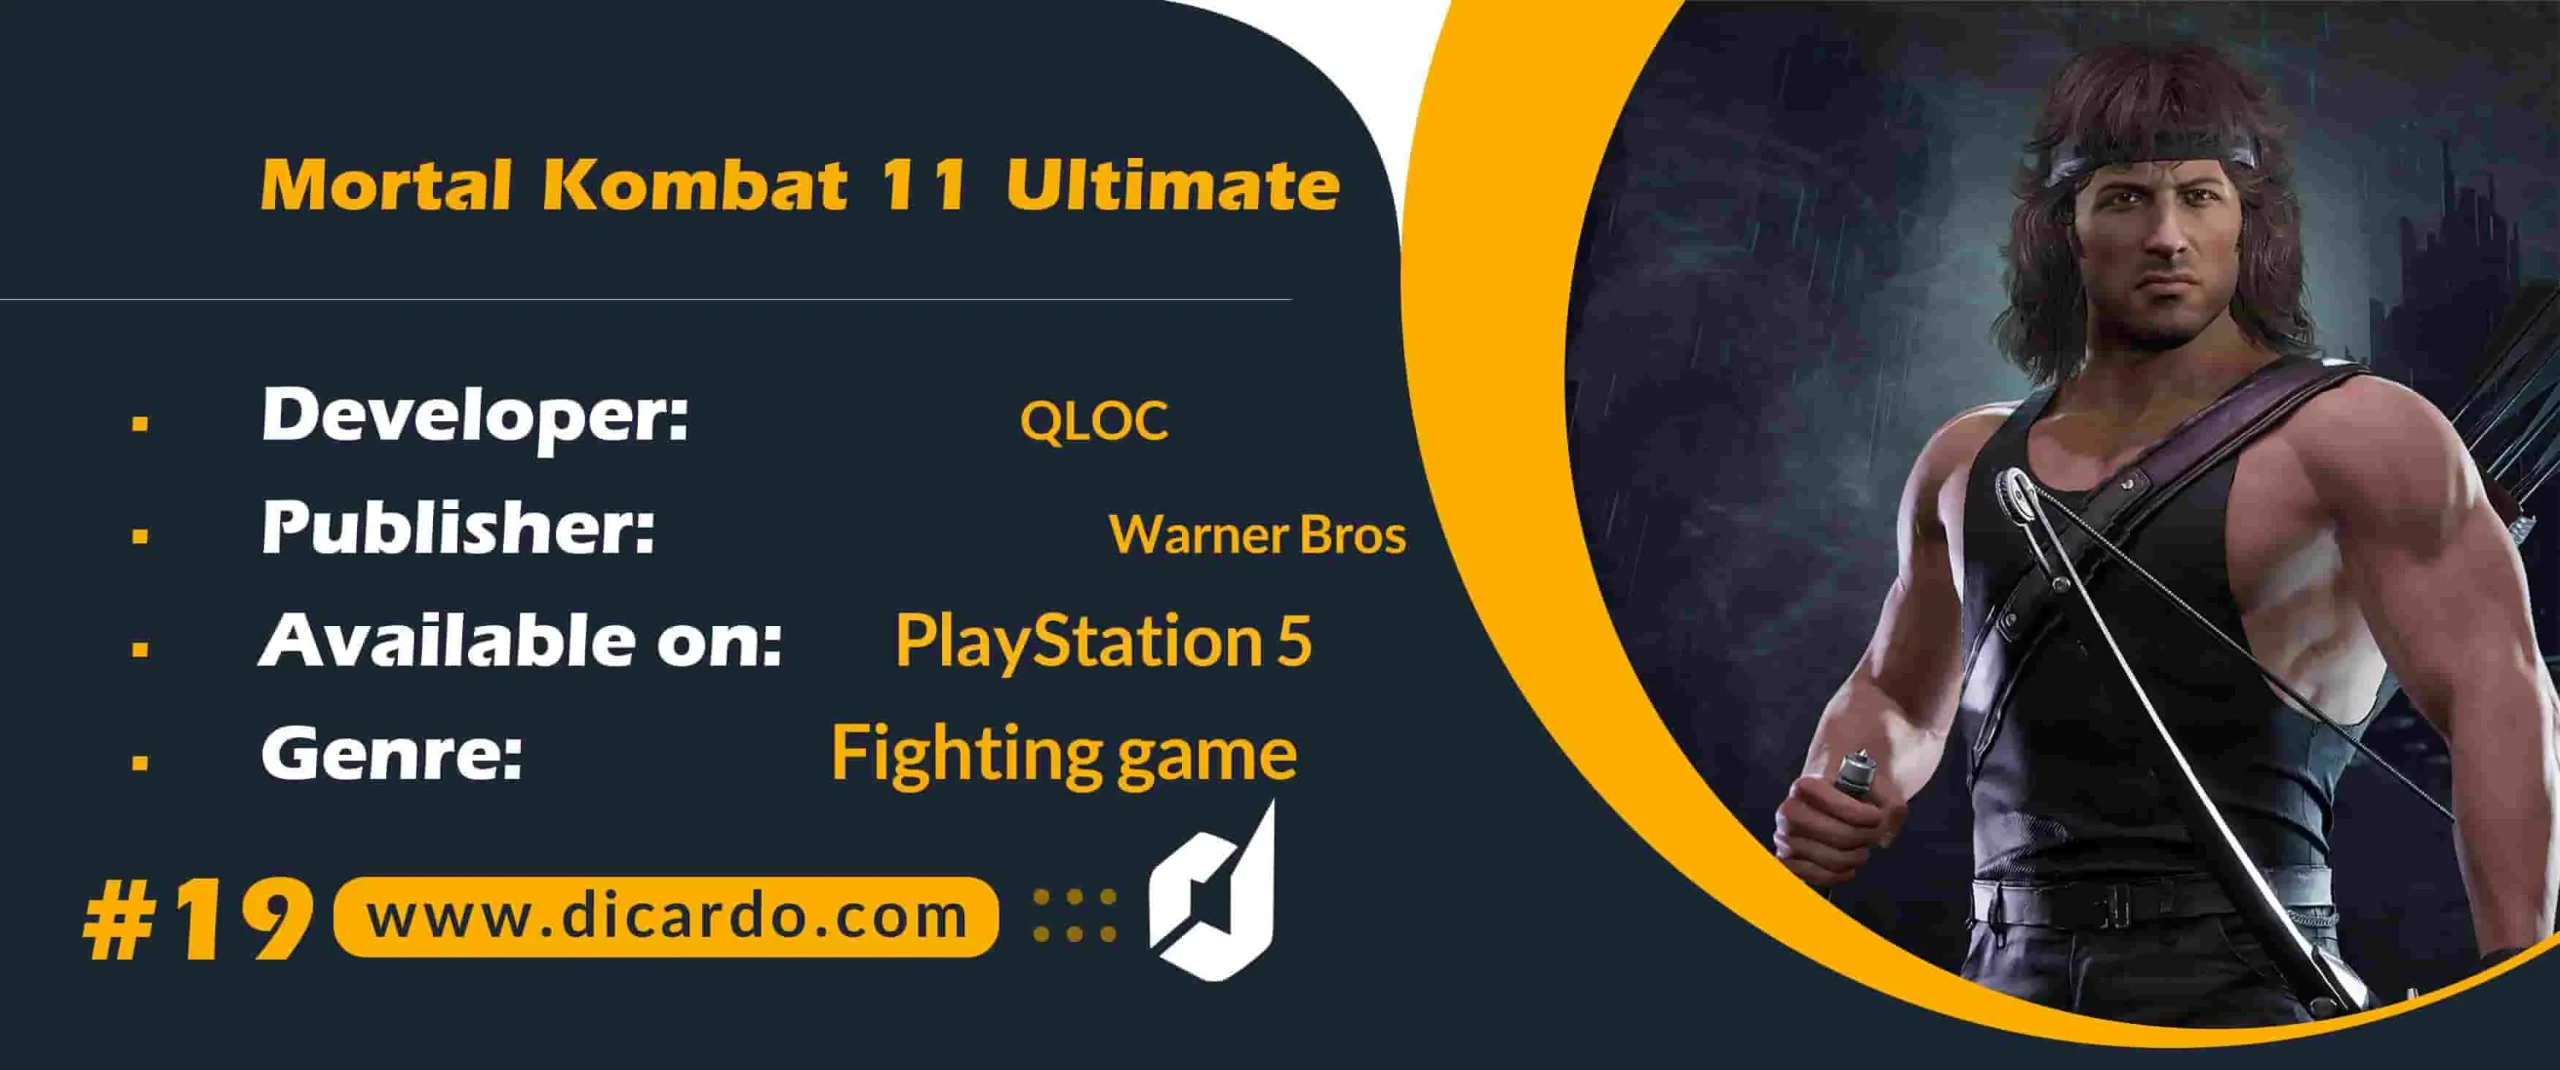 #19 مورتال کامبت 11 آلتیمیت Mortal Kombat 11 Ultimate